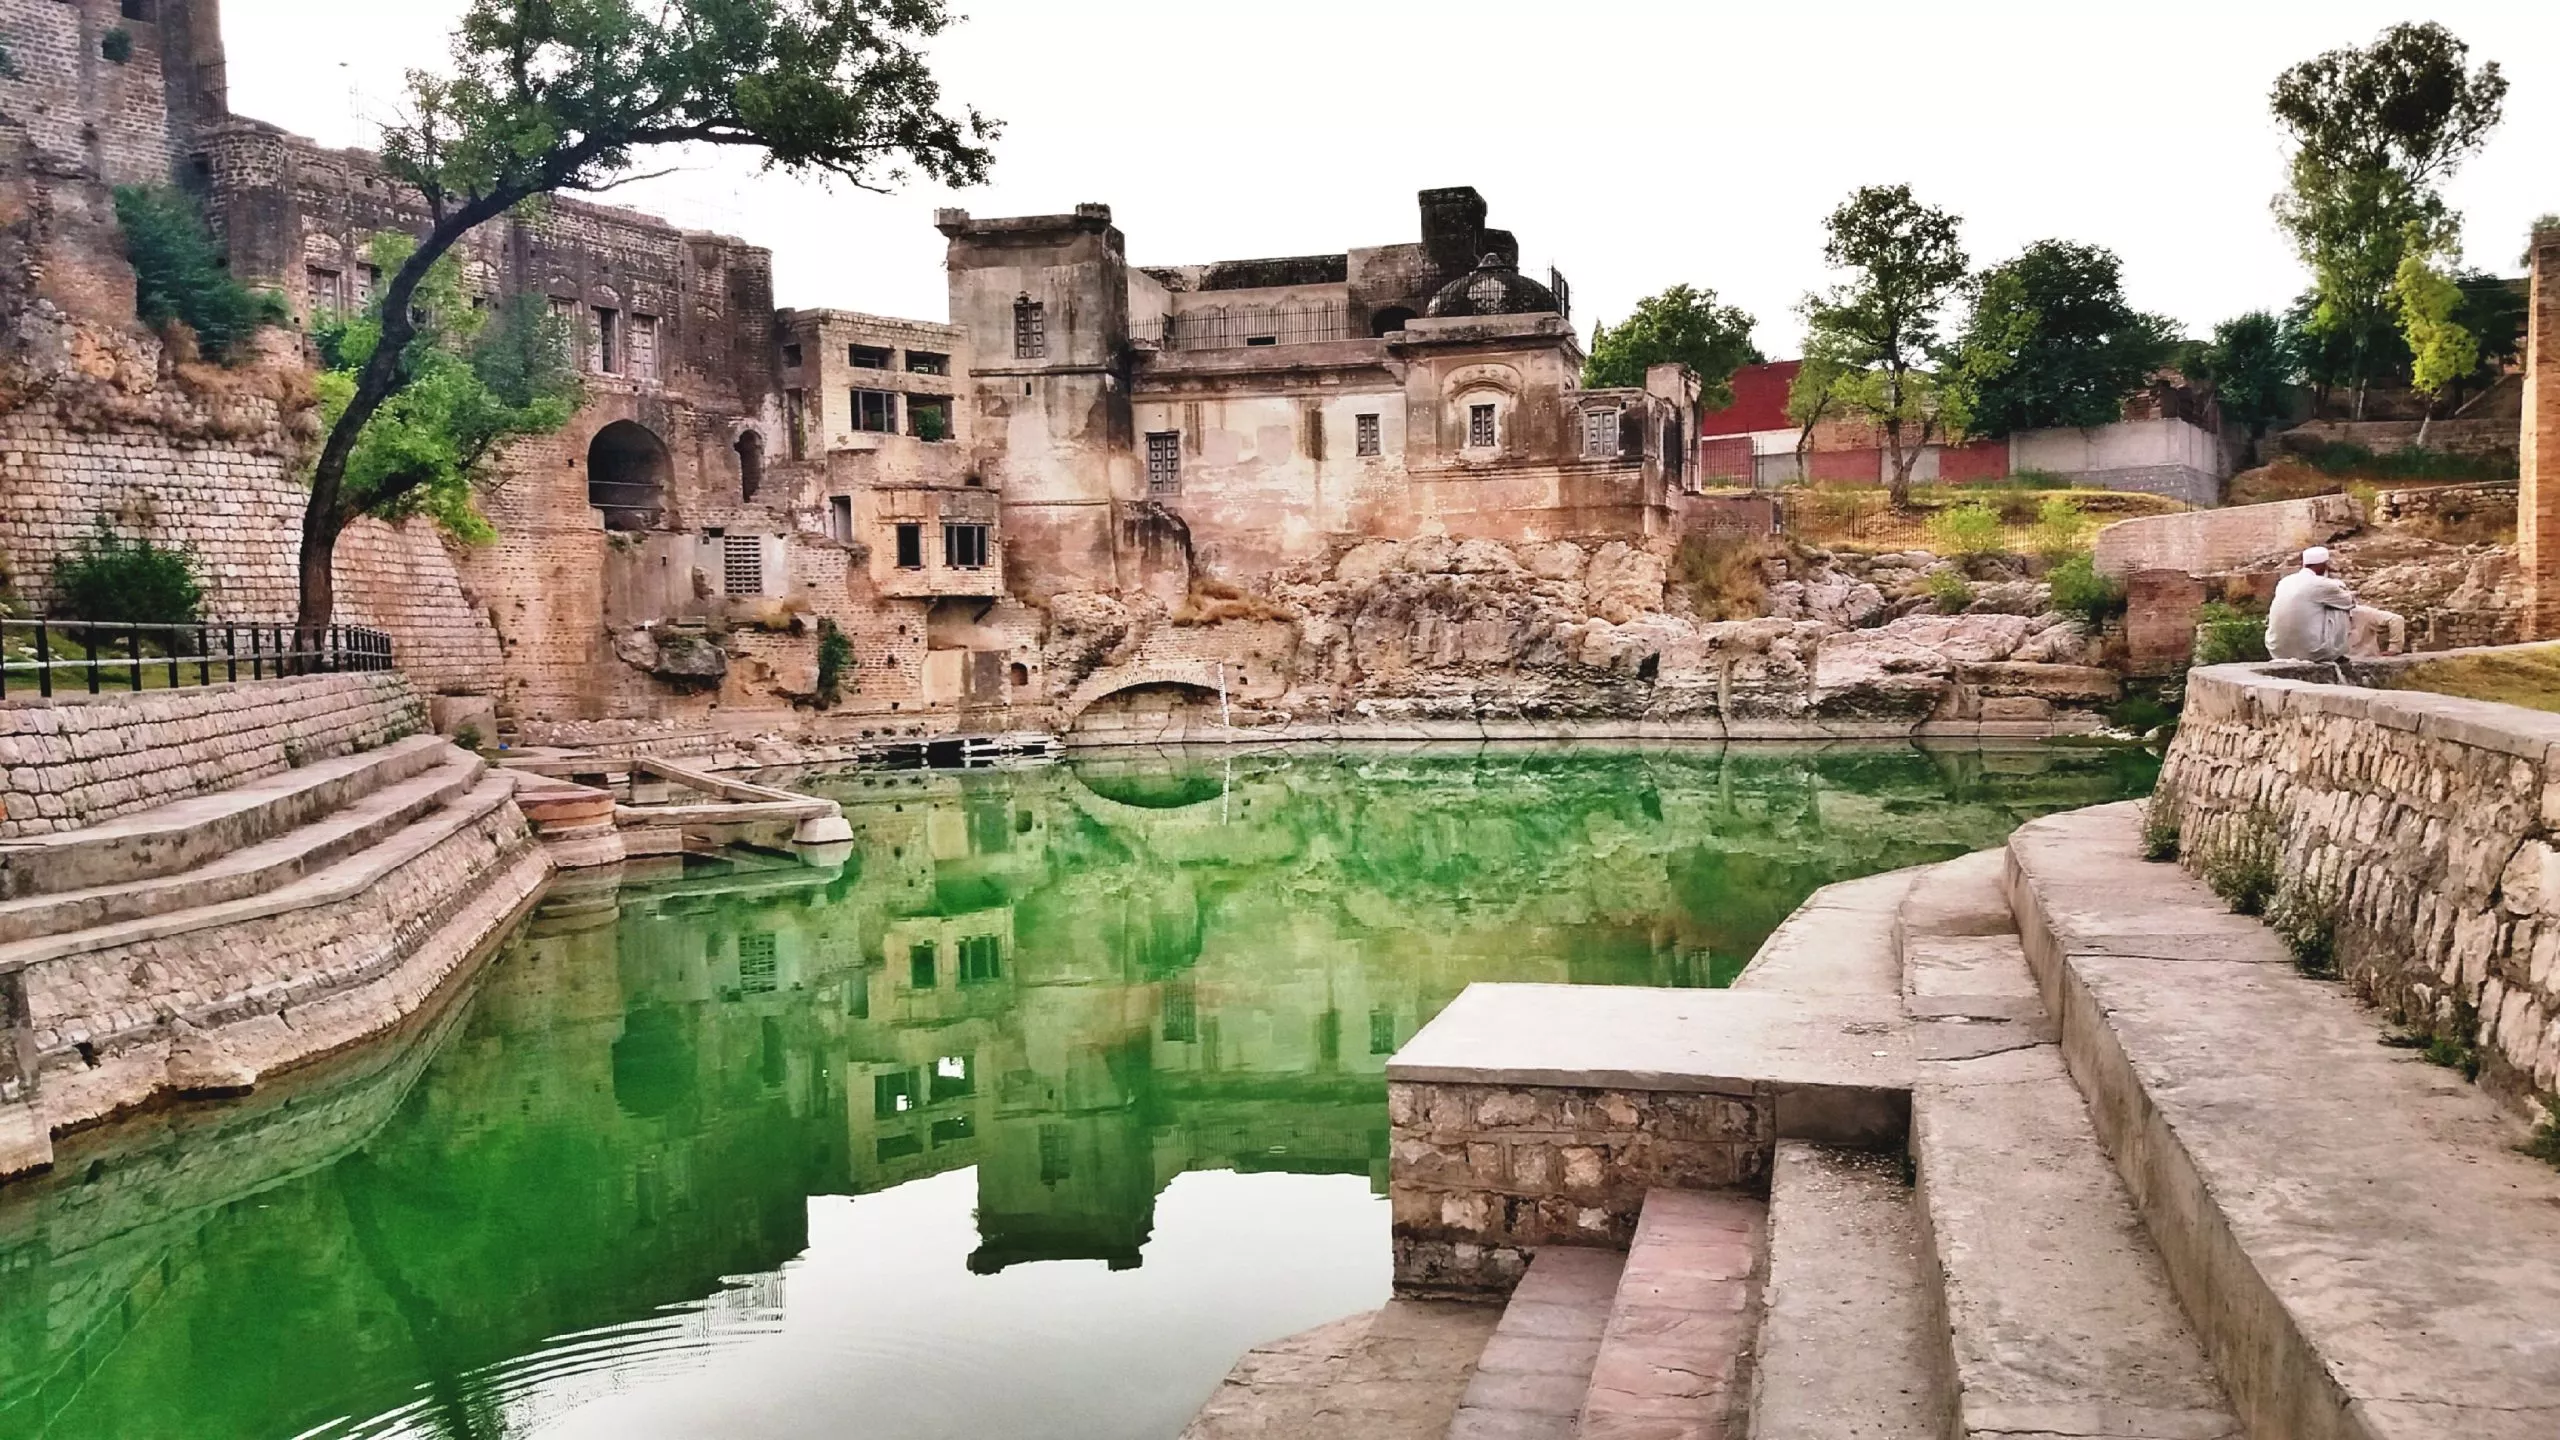 Shri Katas Raj Temples in Pakistan, South Asia | Architecture - Rated 3.6